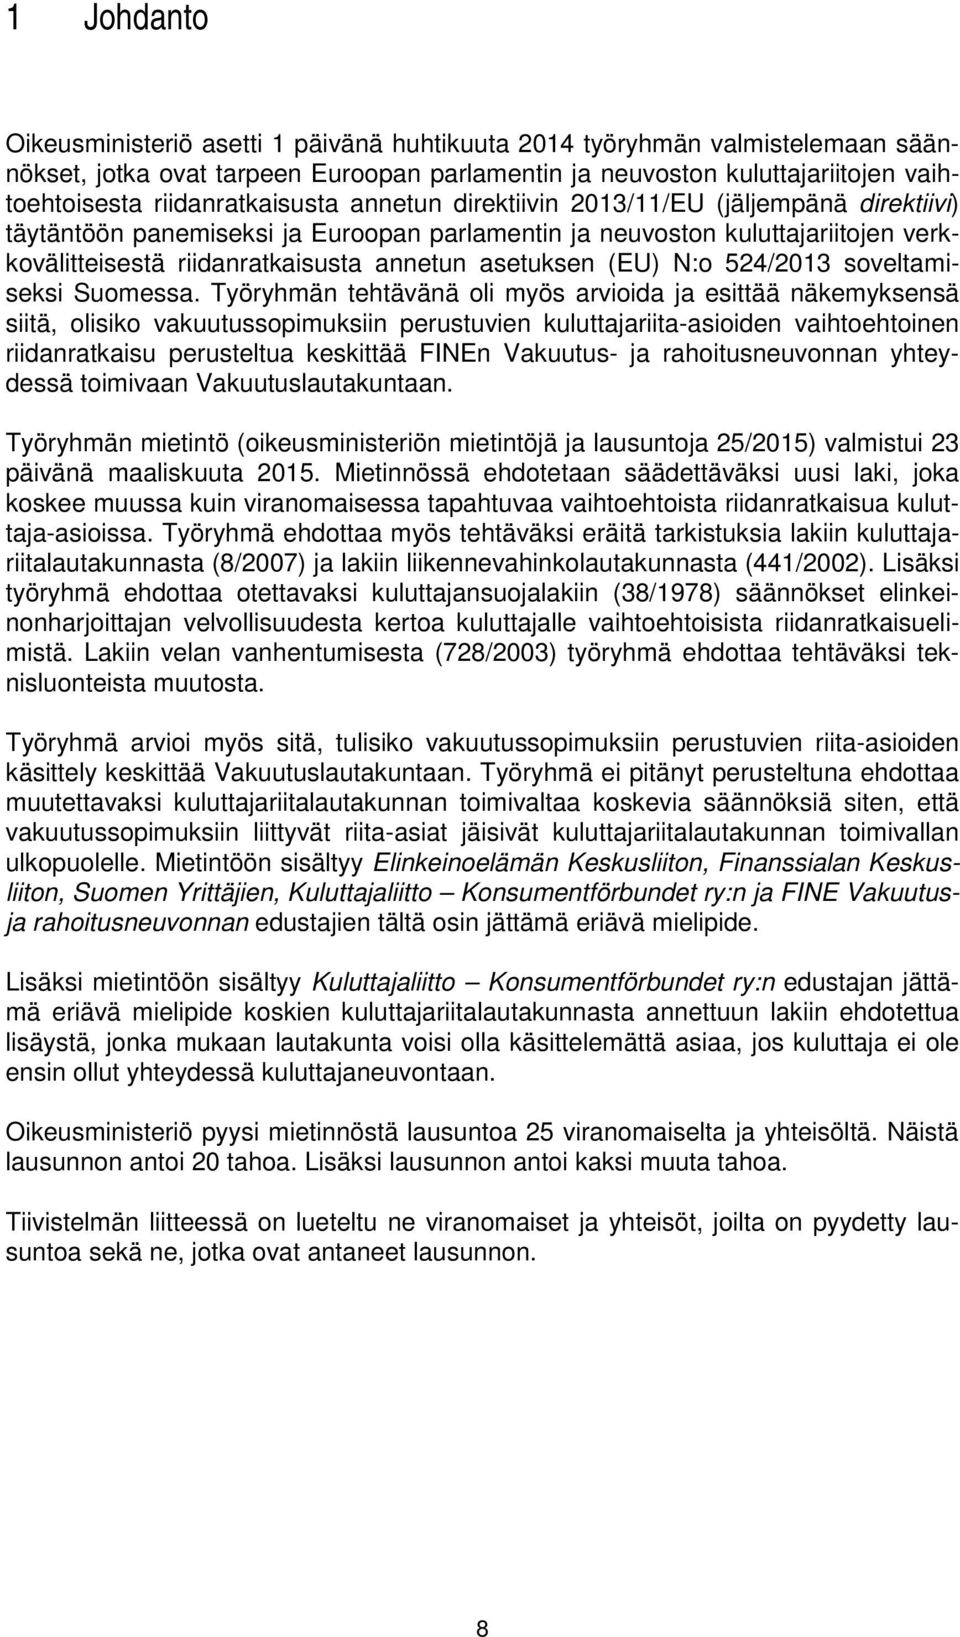 asetuksen (EU) N:o 524/2013 soveltamiseksi Suomessa.